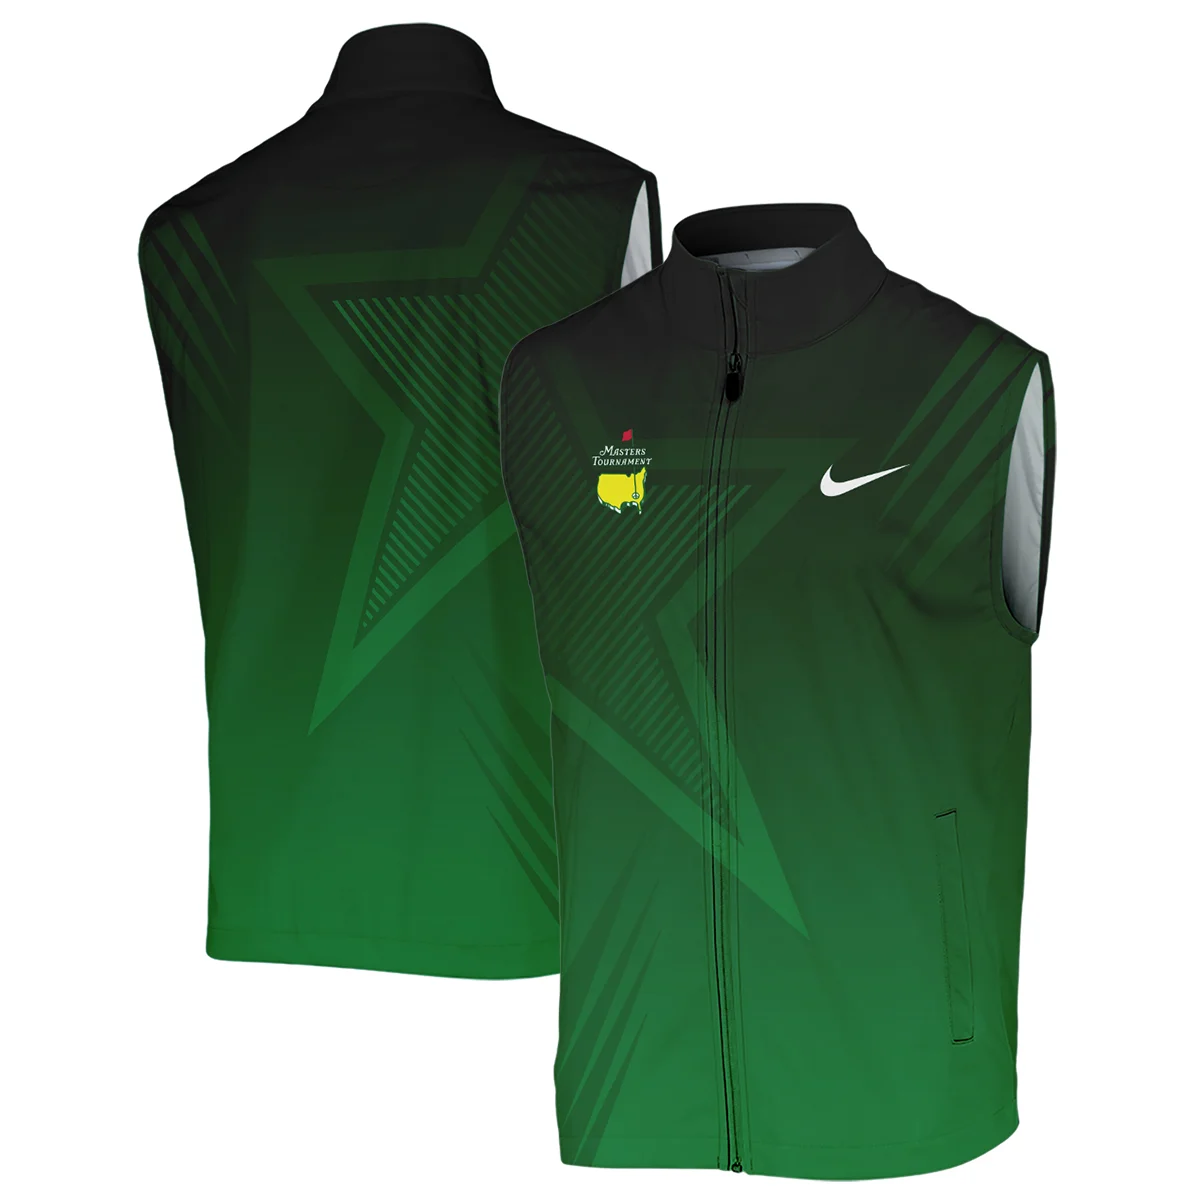 Masters Tournament Nike Star Dark Green Pattern Unisex Sweatshirt Style Classic Sweatshirt